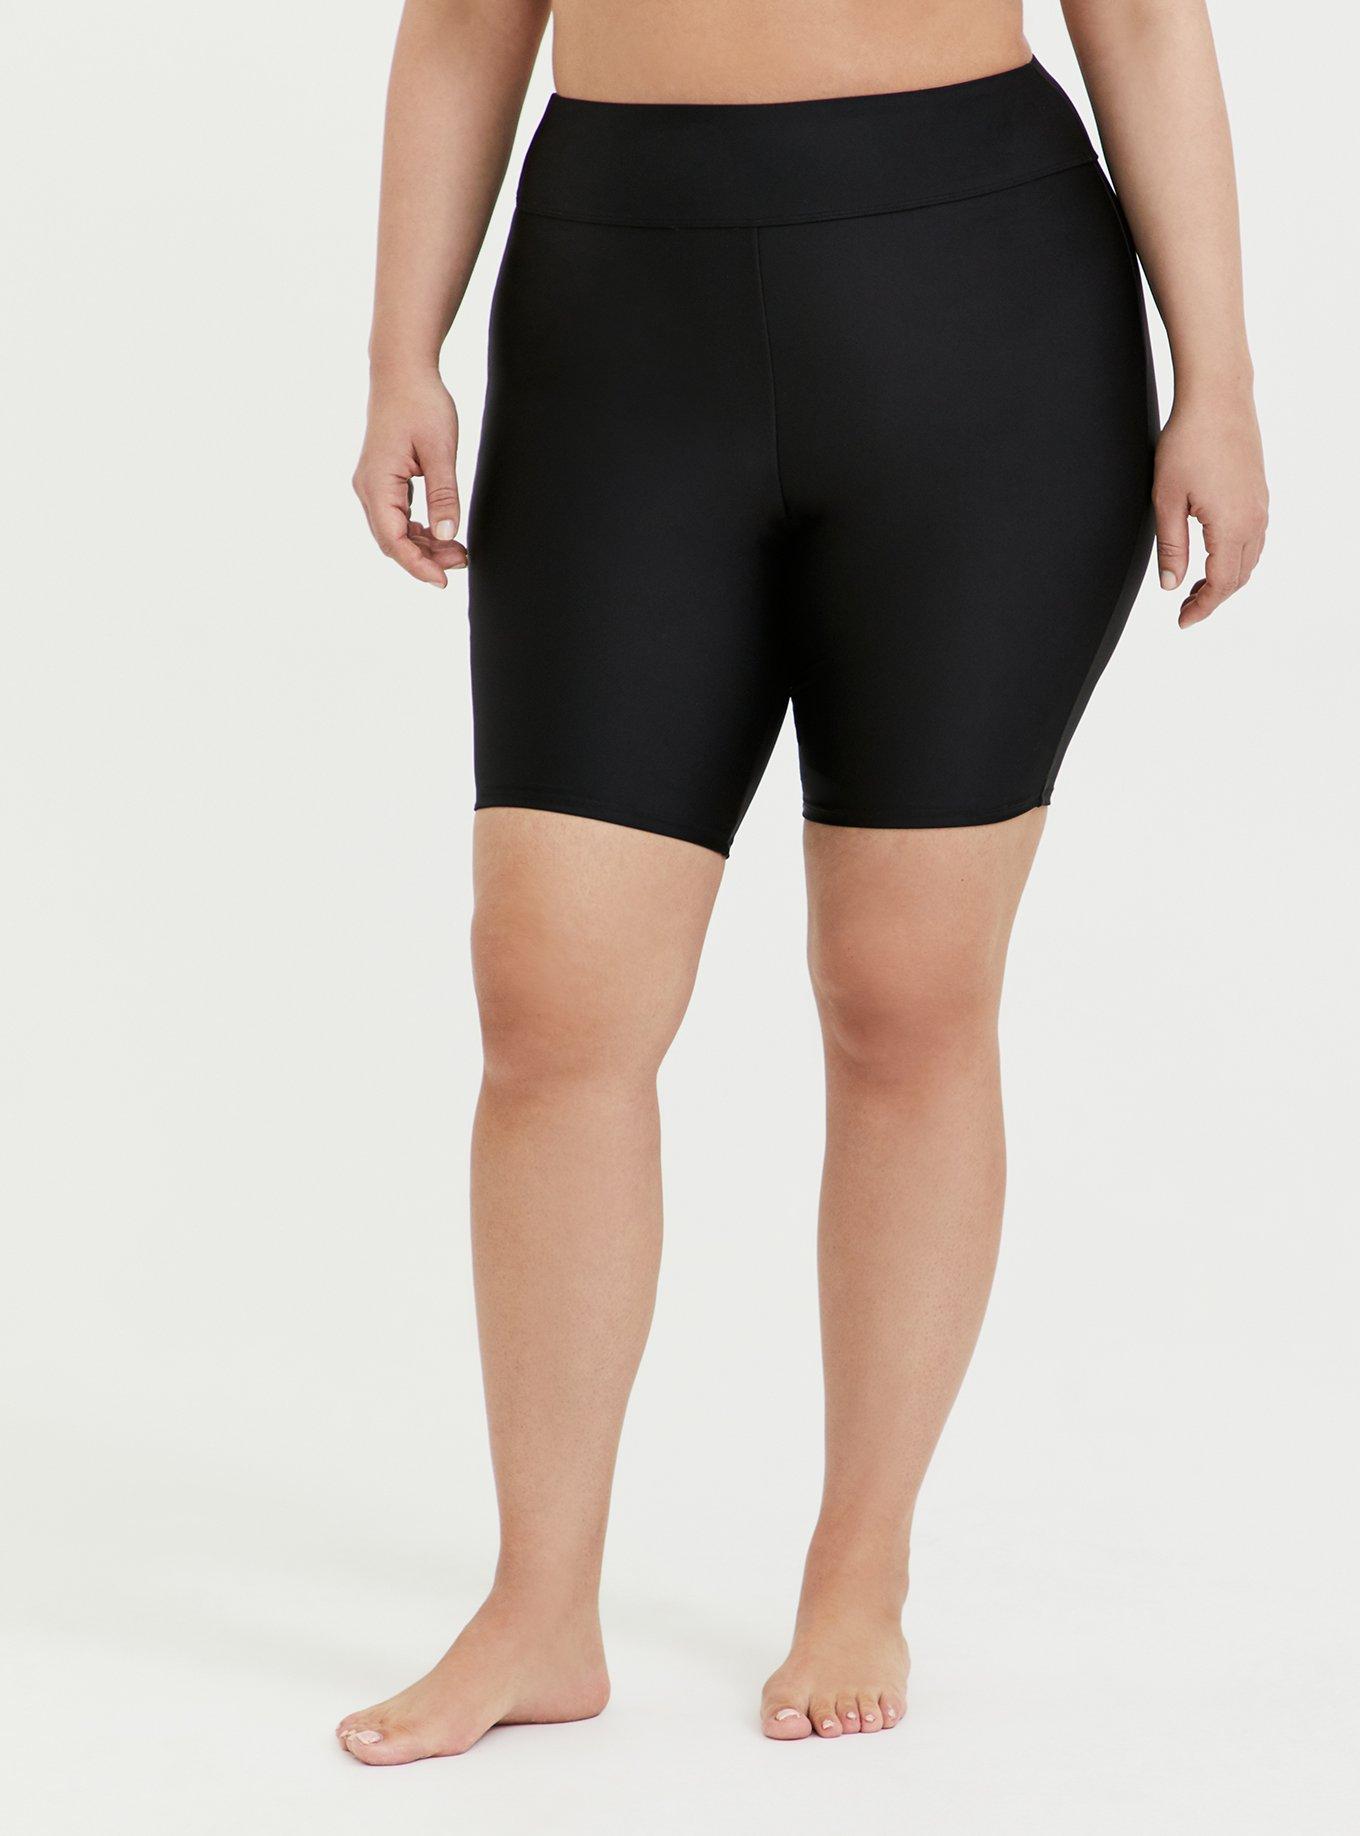 torrid, Shorts, Torrid Happy Camper Shorts Performance Wear Black Size X  1416